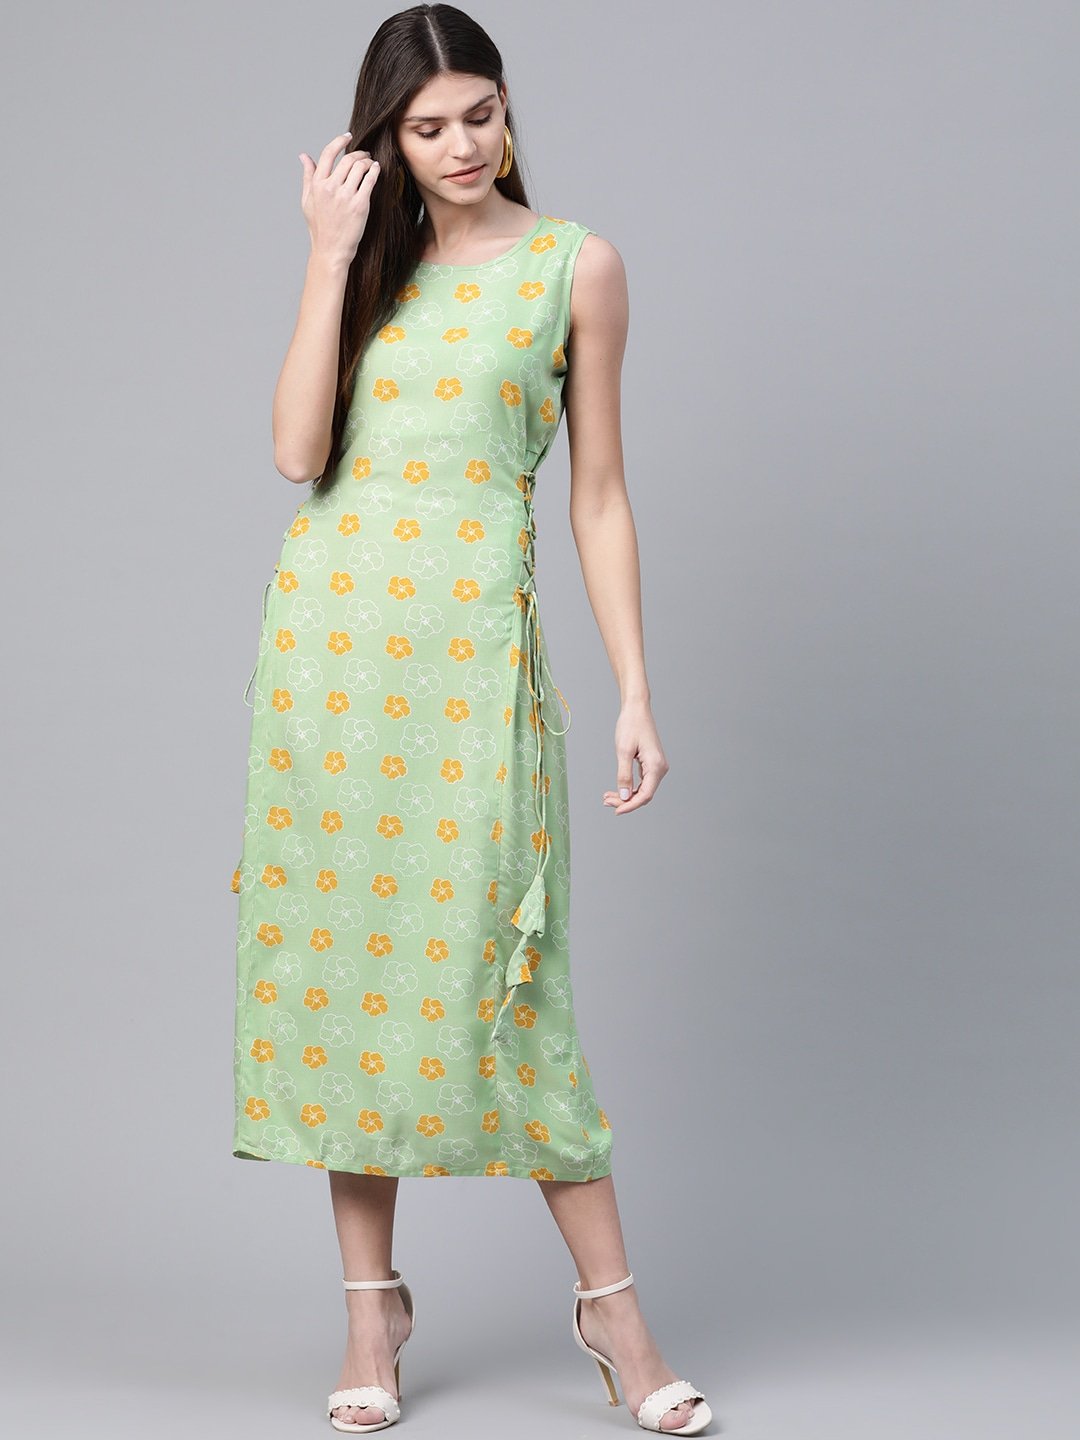 Women's  Green & Mustard Yellow Floral Printed A-Line Dress - AKS